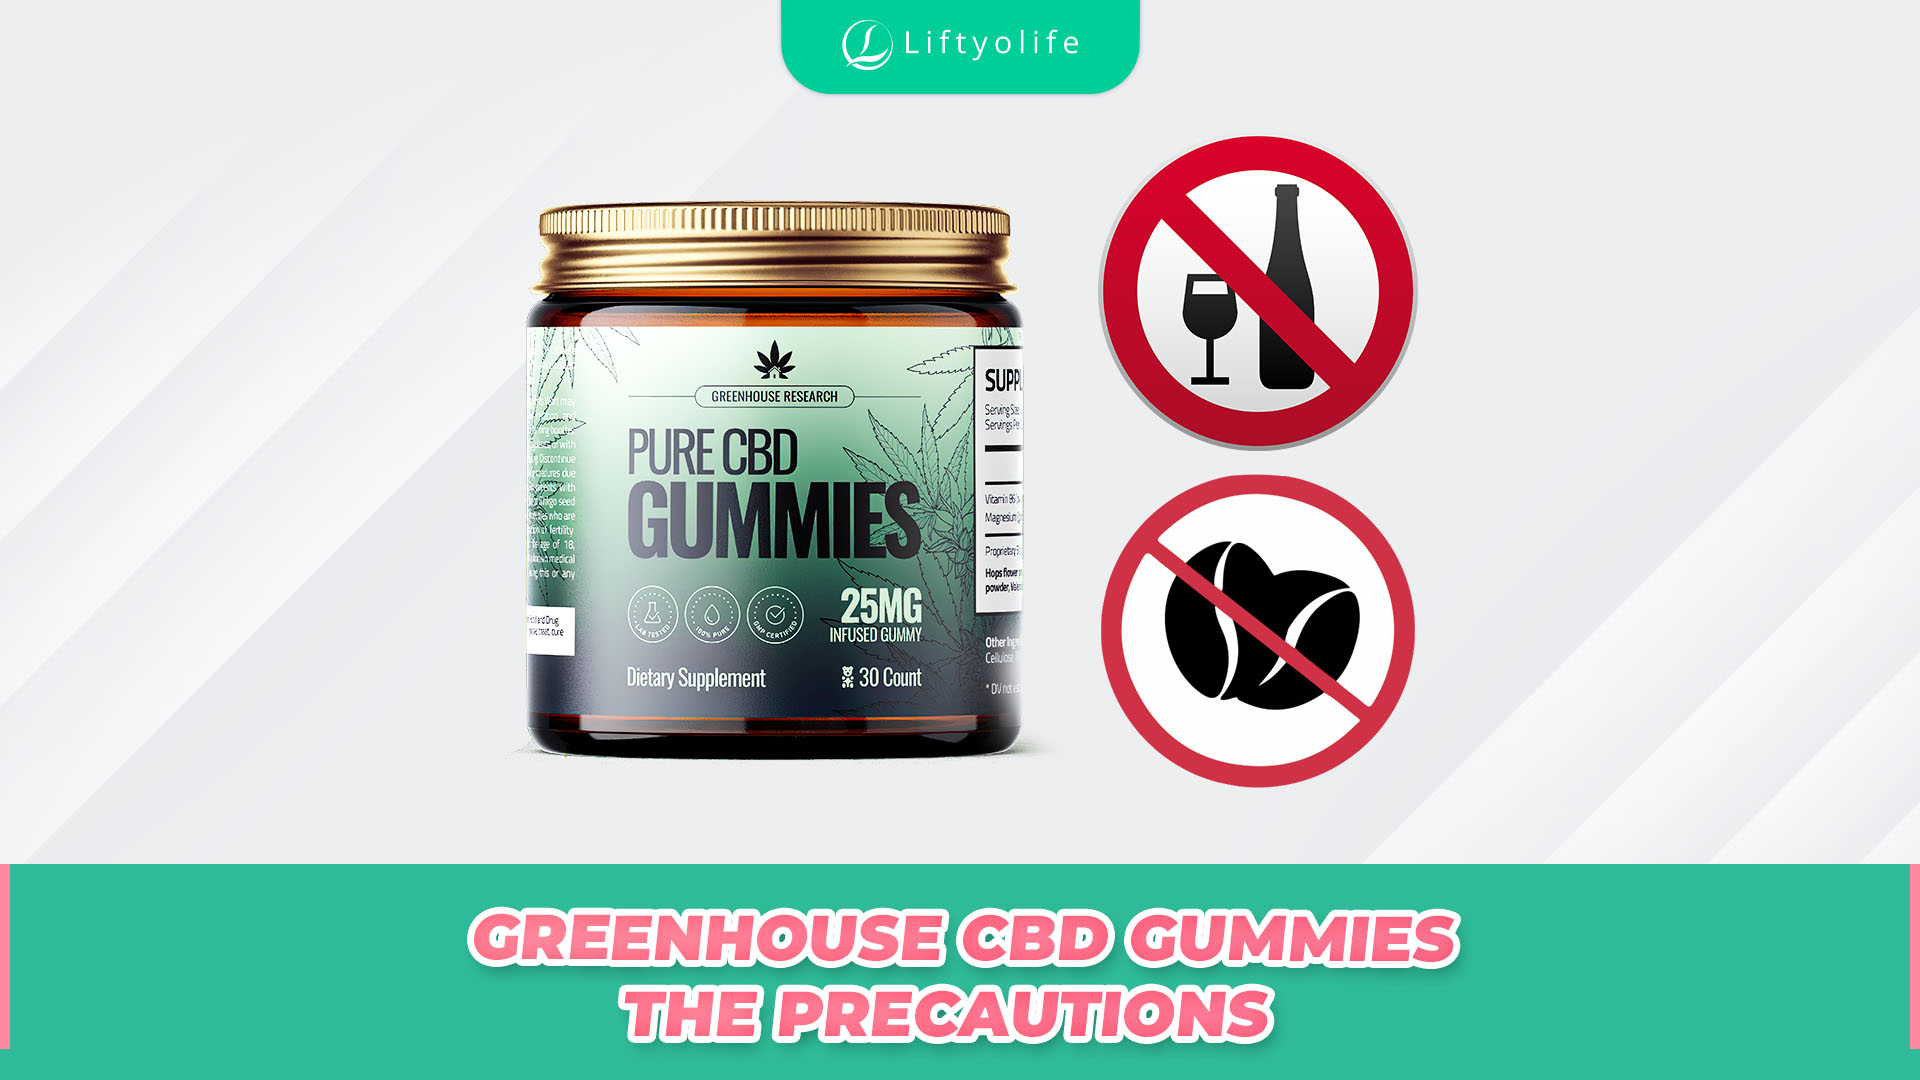 Greenhouse CBD Gummies Review: The Precautions 